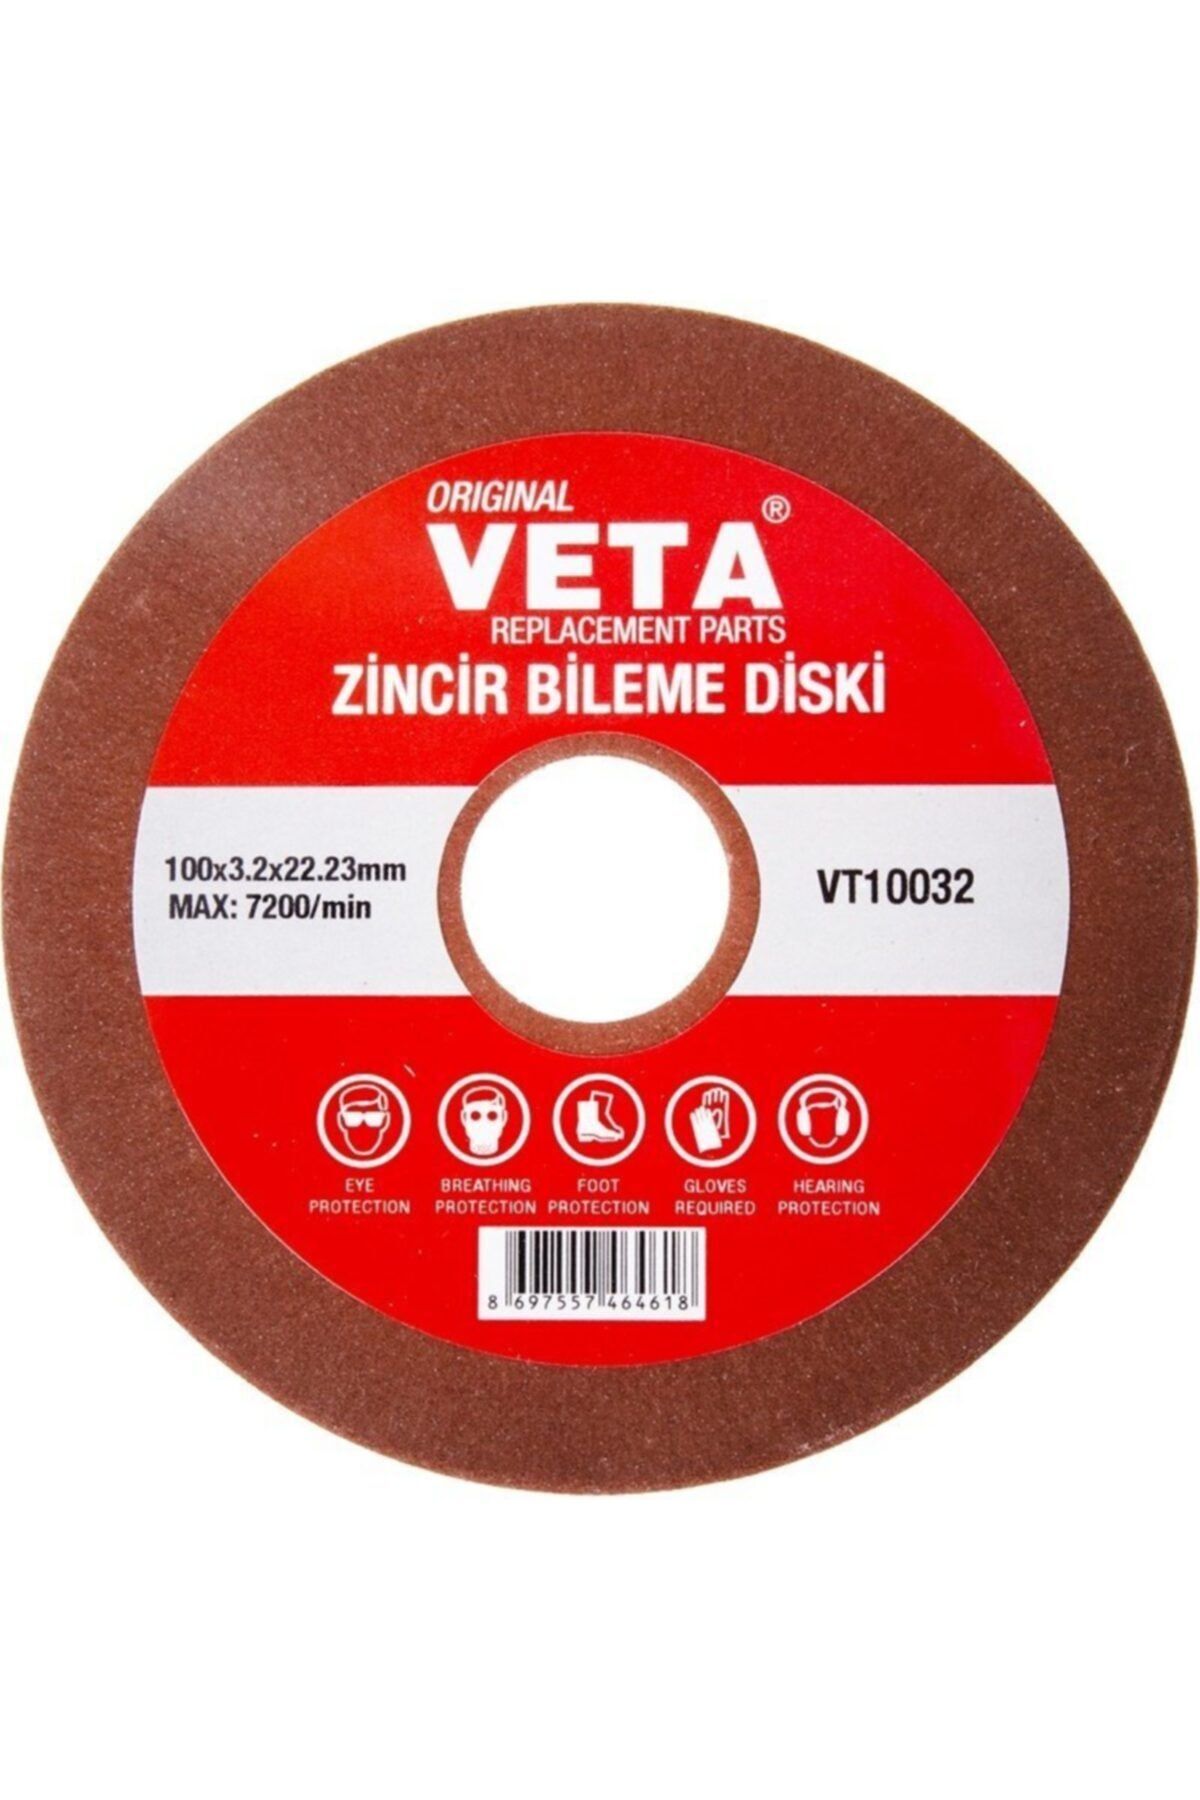 Palmera Vt10032 Zincir Bileme Diski 3.2mm Zb85